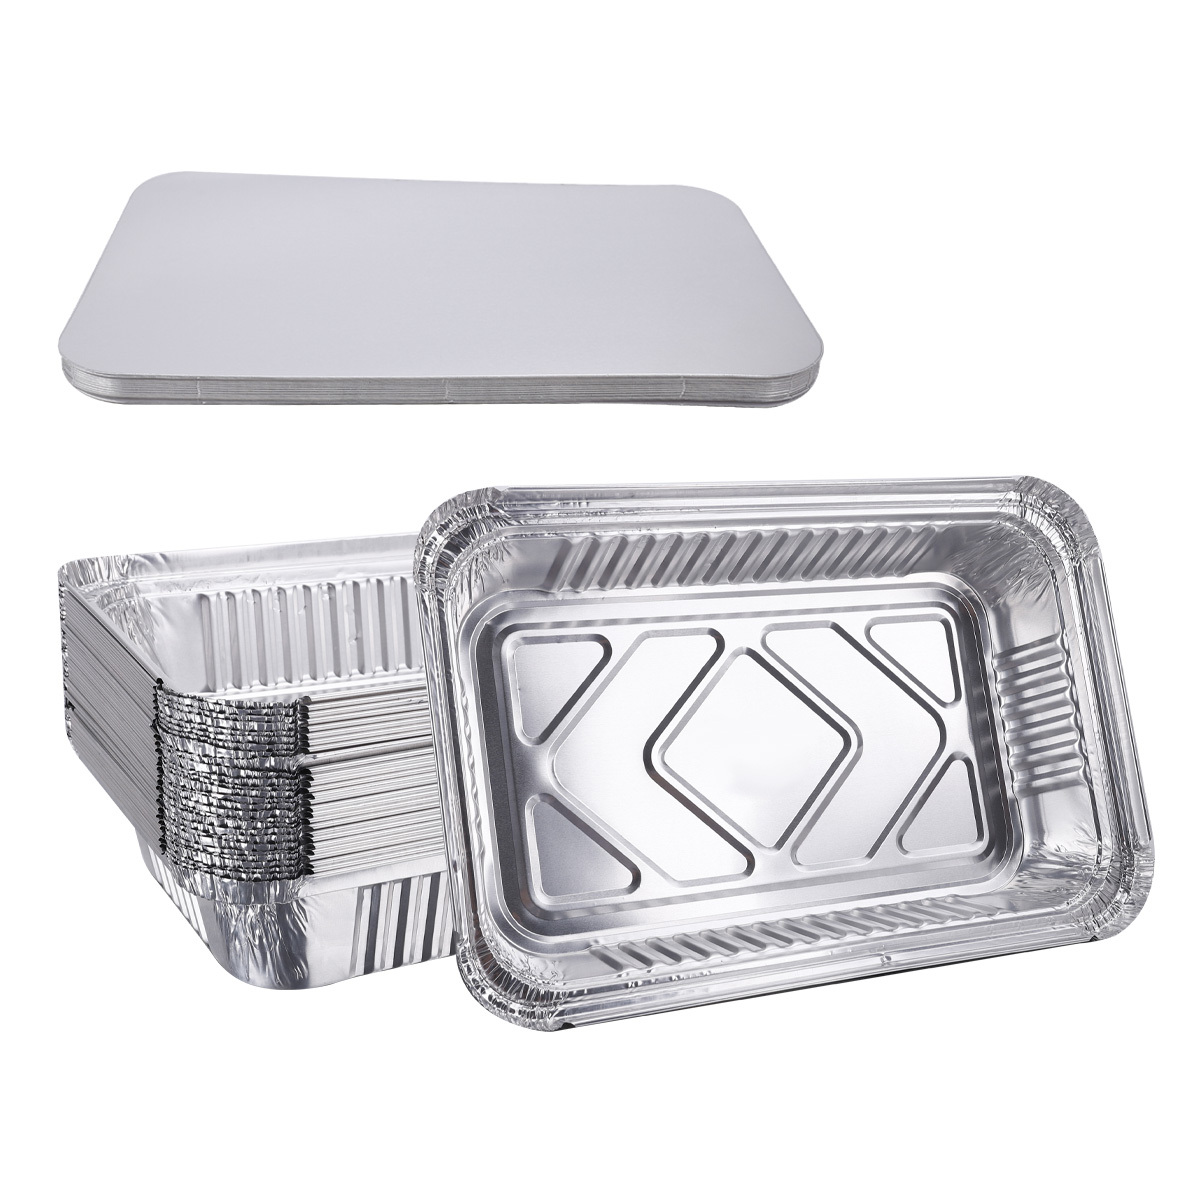 20pcs Aluminum Pans With Clear Lids, Aluminum Foil Pans - Portable Food  Containers, Recyclable Aluminum Foil, Firm Seal, Fresh & Spill Proof - 10 X